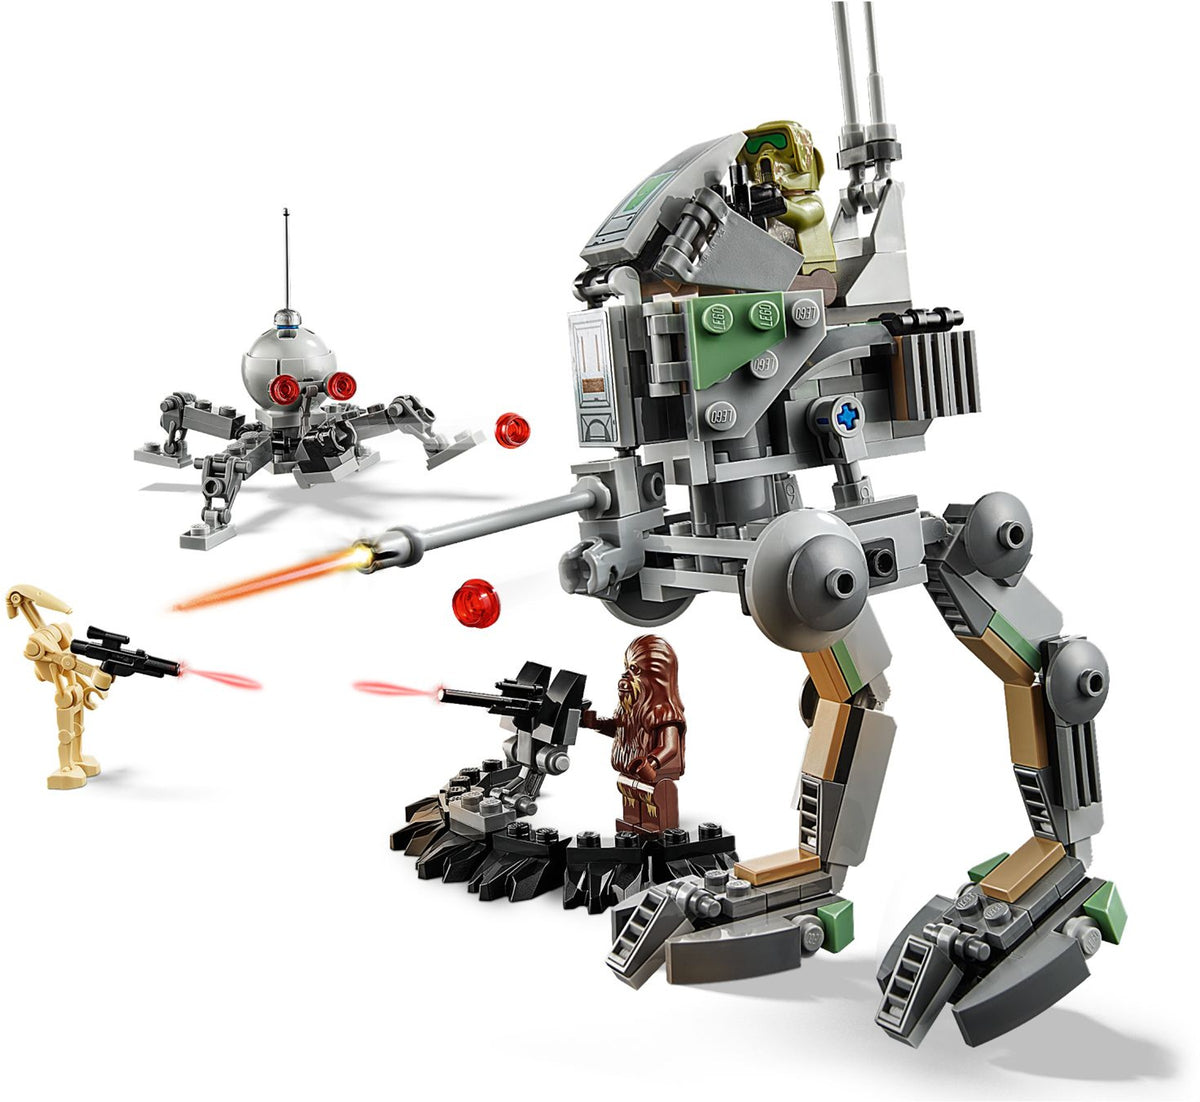 LEGO Star Wars 75261 Clone Scout Walker – 20 Jahre LEGO Star Wars